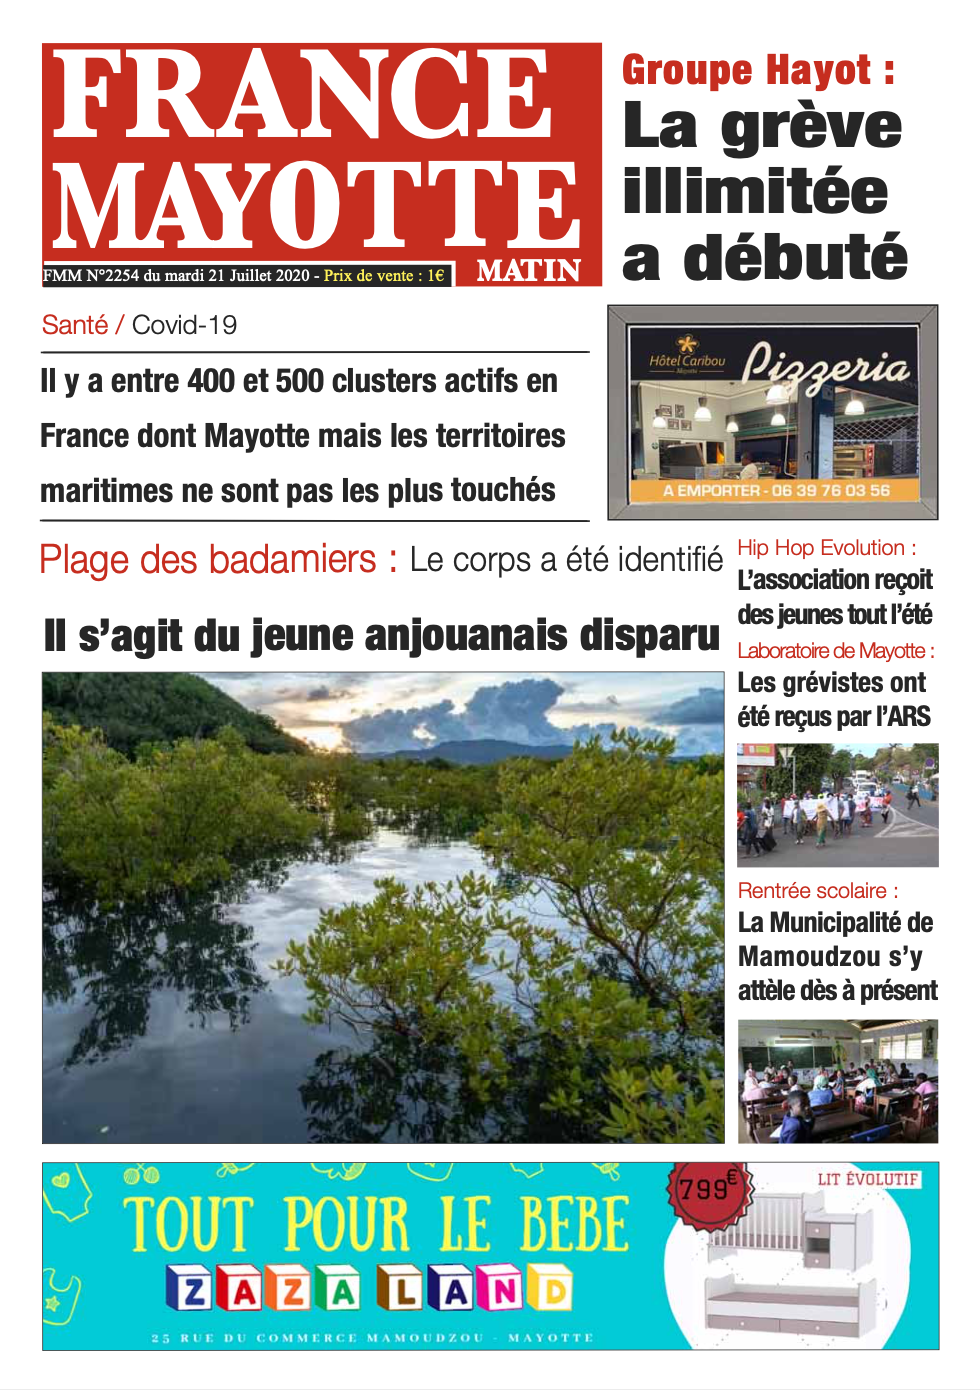 France Mayotte Mardi 21 juillet 2020